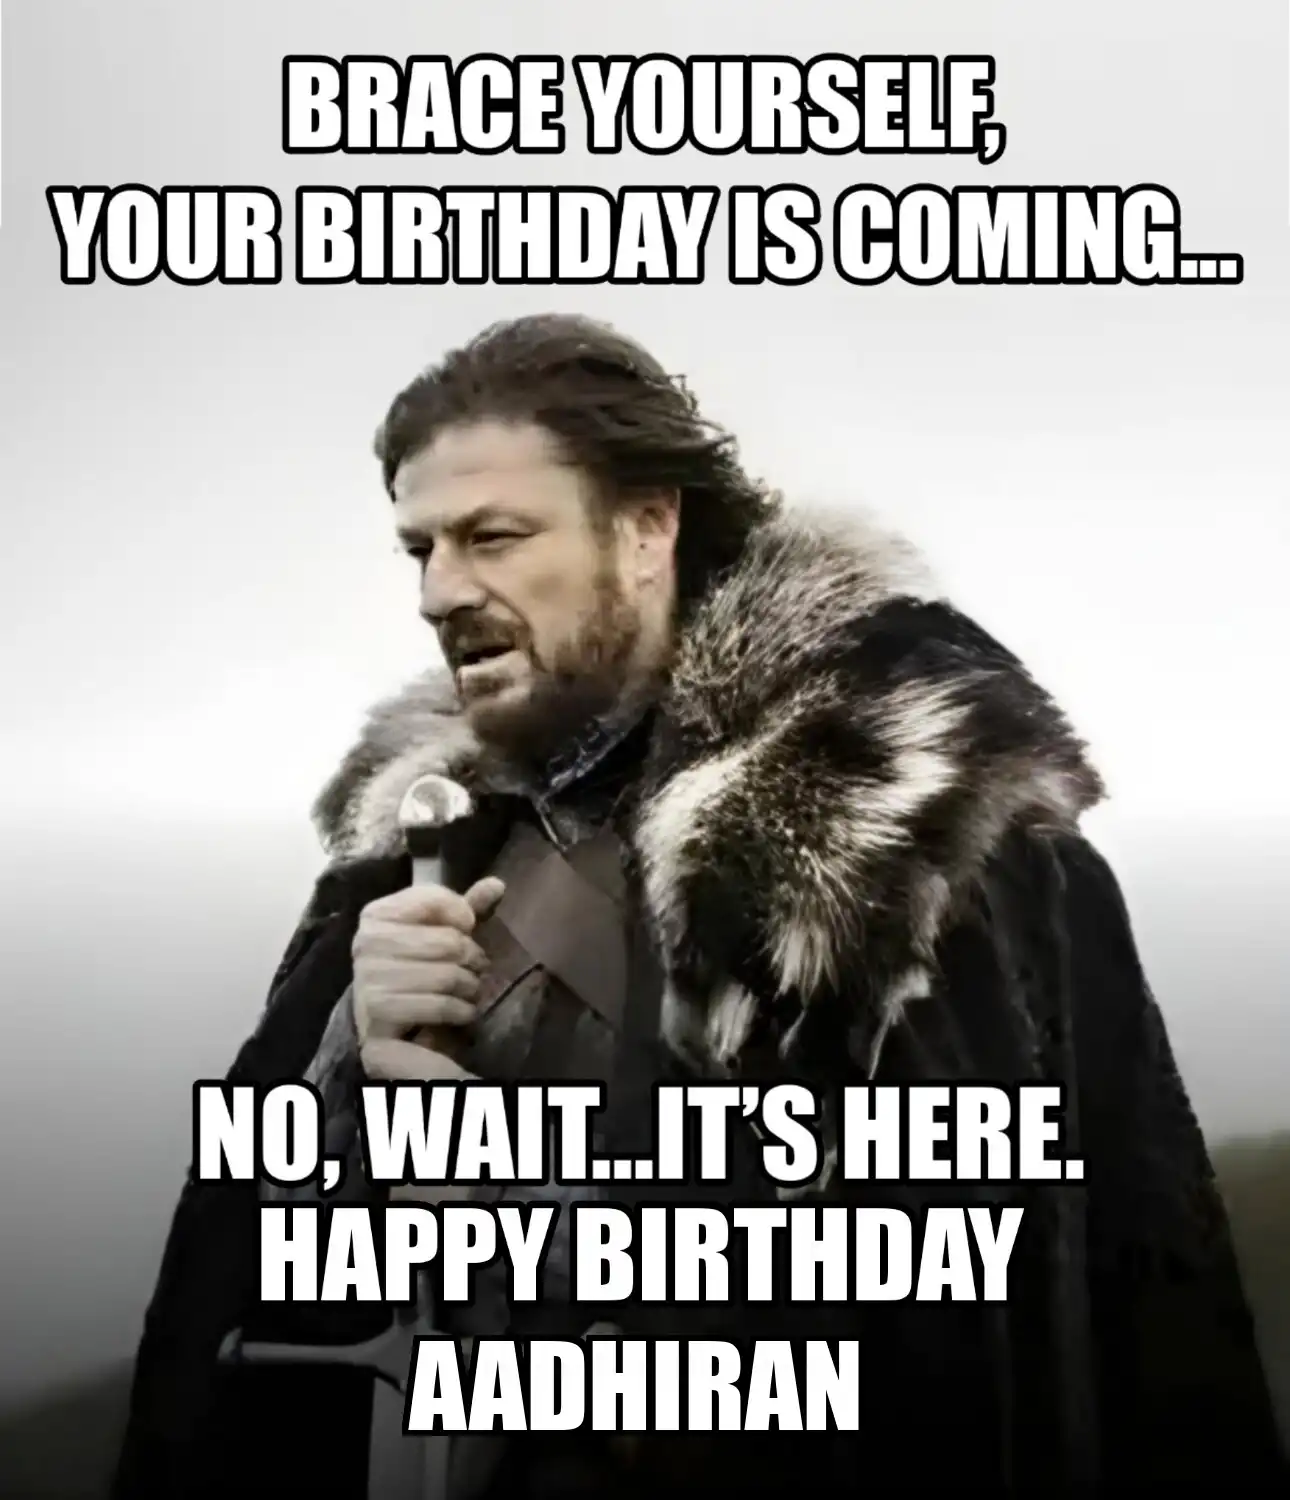 Happy Birthday Aadhiran Brace Yourself Your Birthday Is Coming Meme